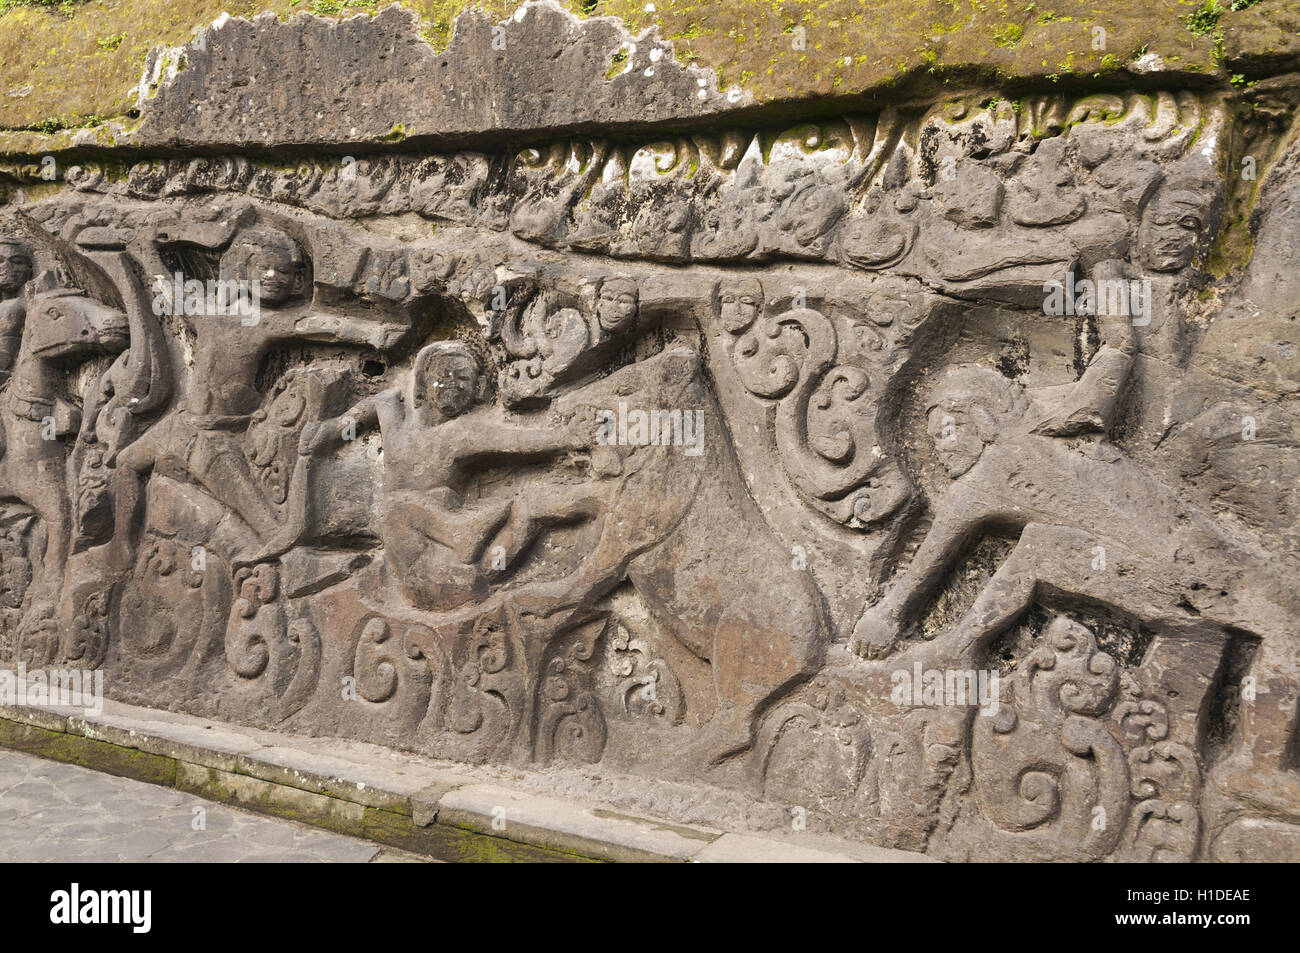 Indonesia, Bali, Bedulu, Yeh Pulu, Hindu relief carvings, 14th c Stock Photo